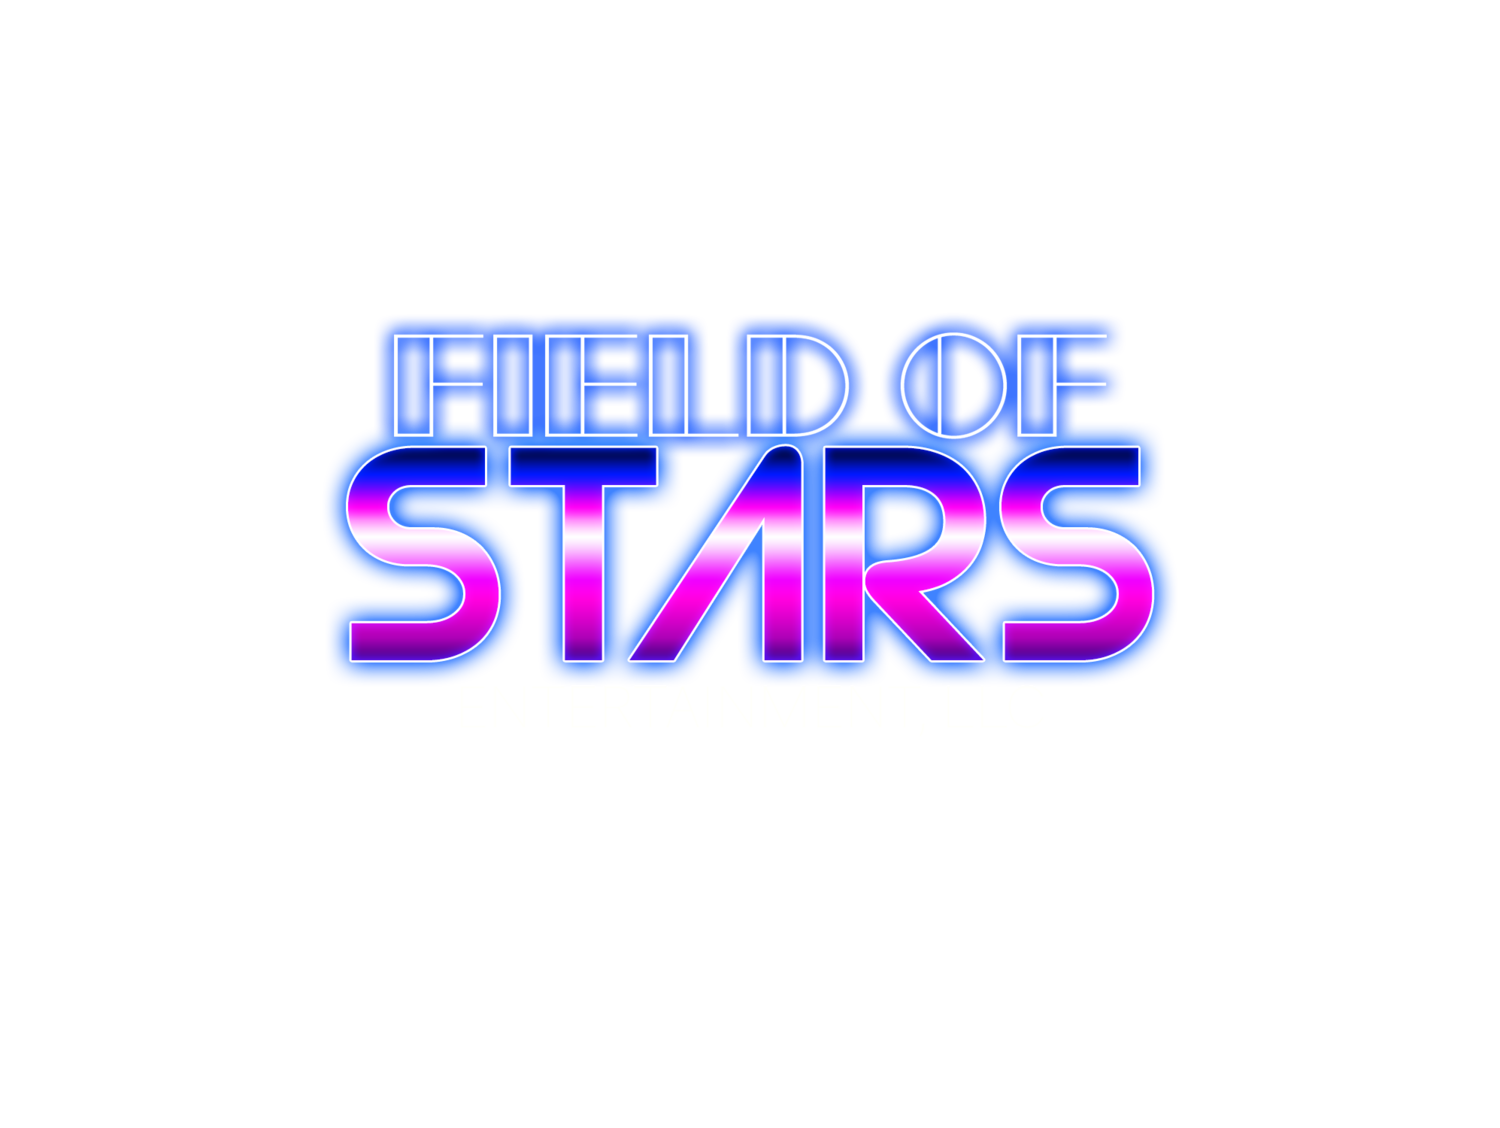 Field Of Stars Entertainment